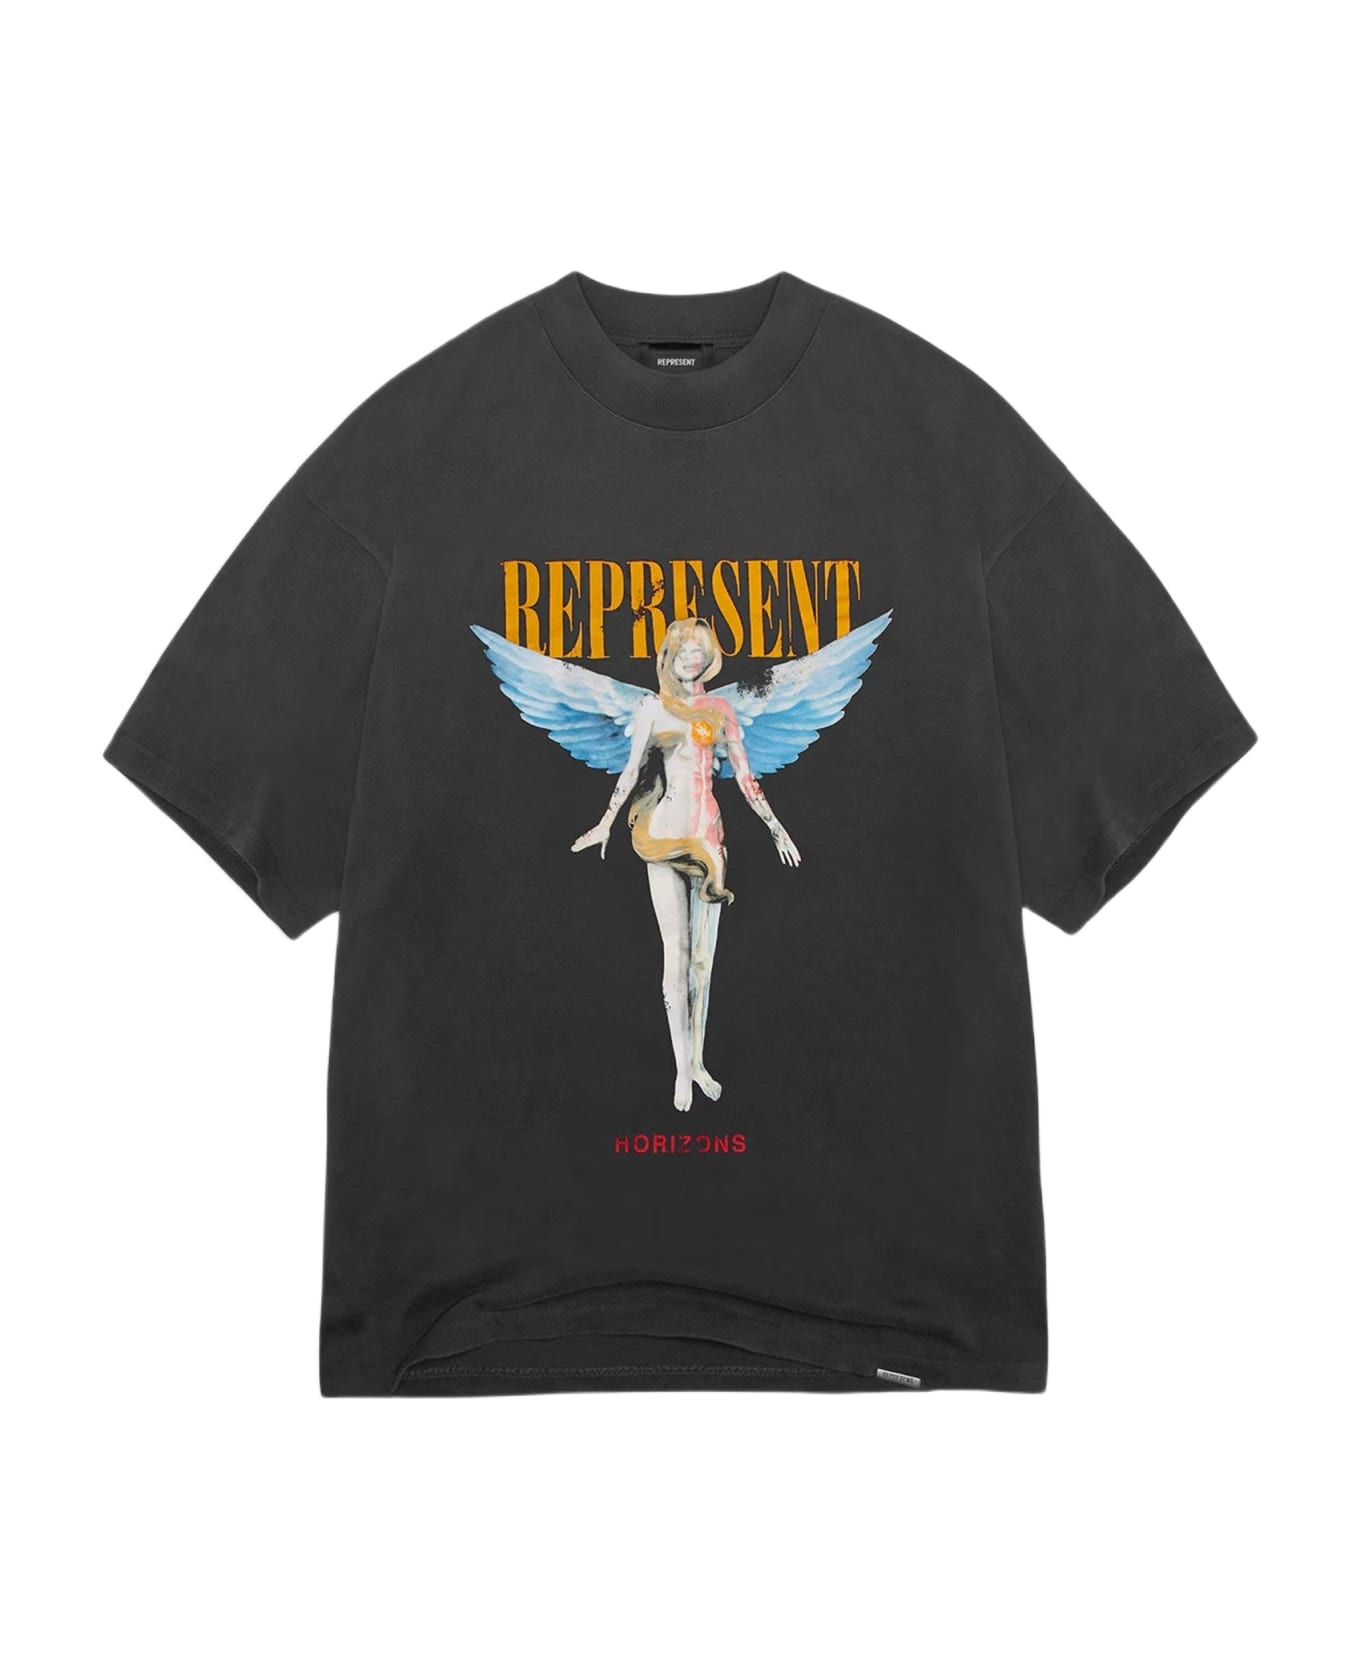 REPRESENT Reborn T-shirt Washed black t-shirt with graphic print and logo - Reborn T-Shirt - Nero